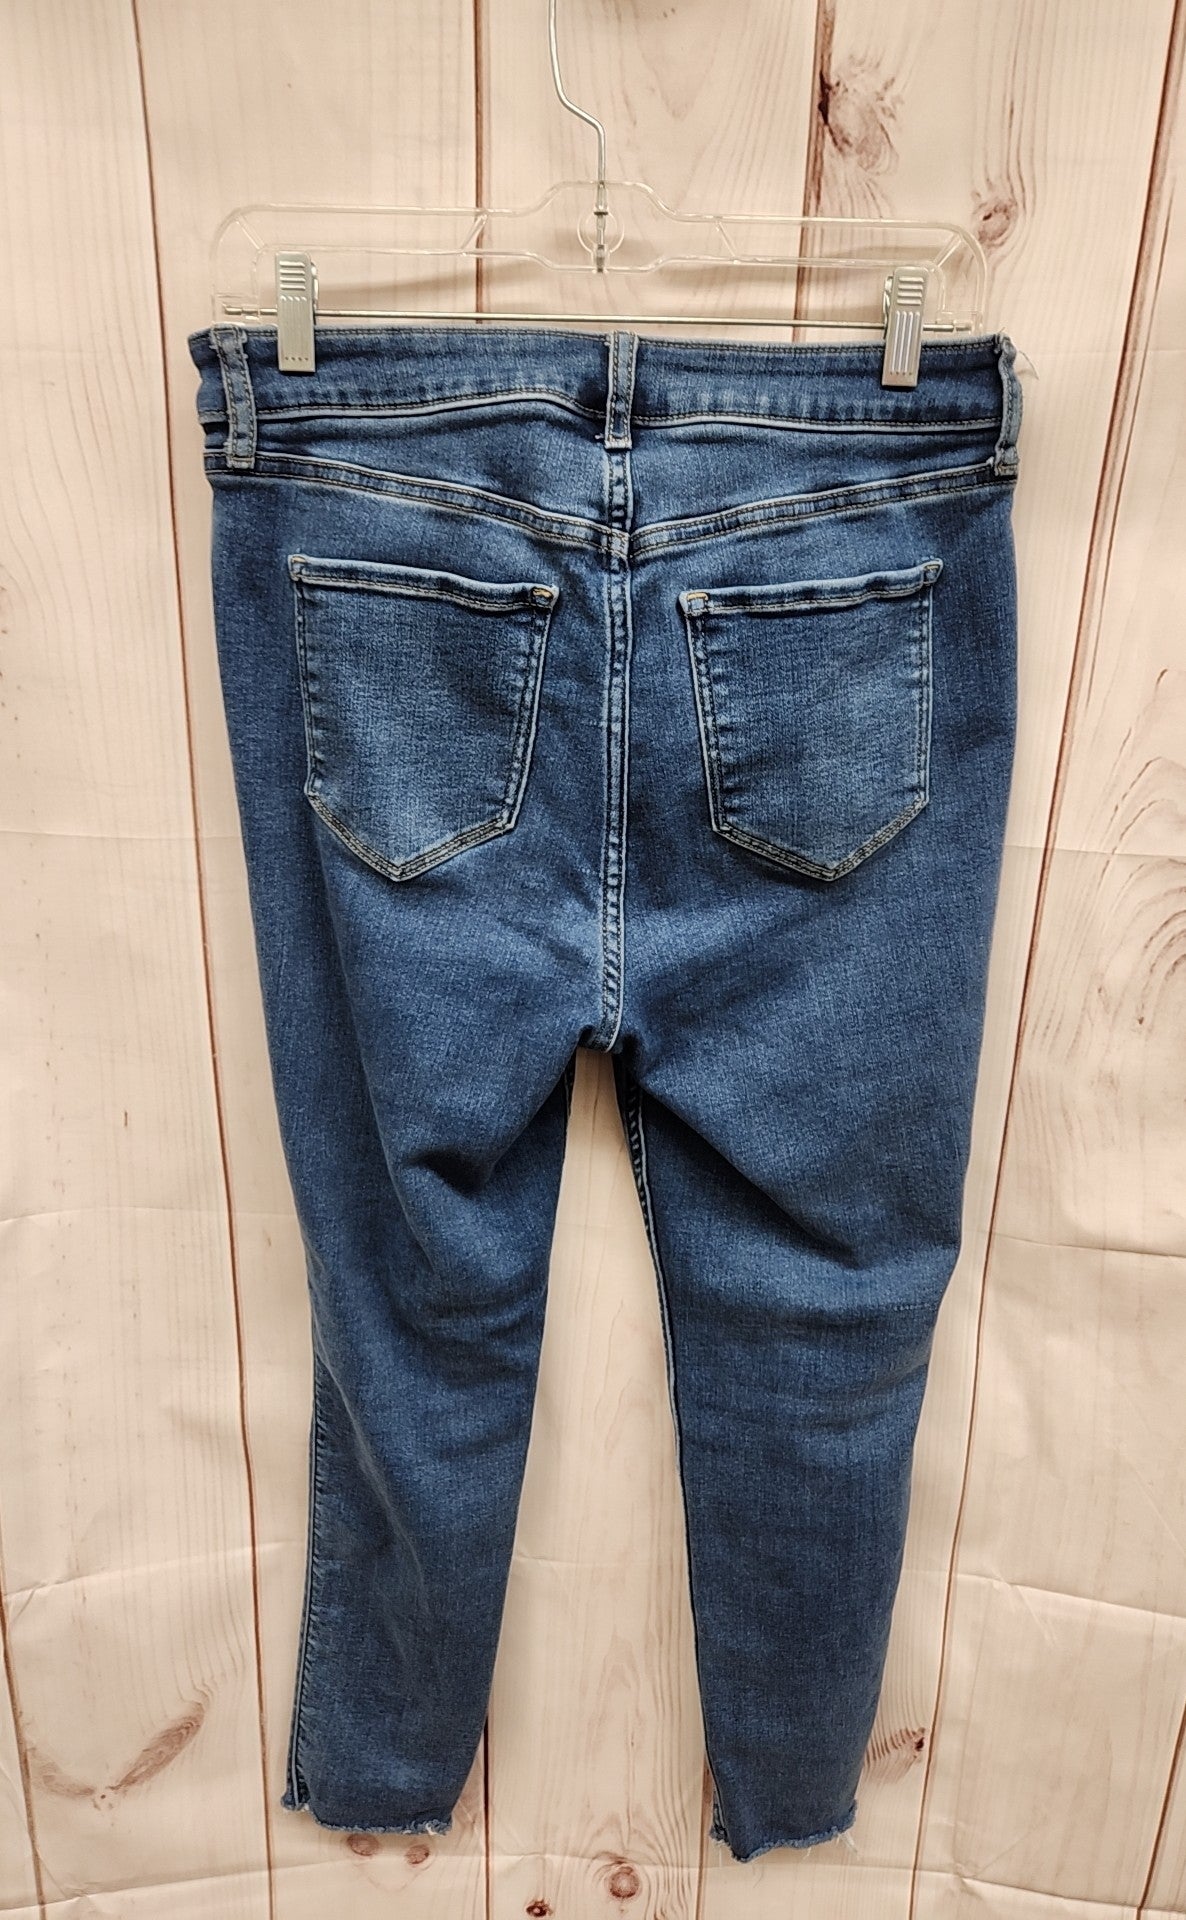 Old Navy Women's Size 30 (9-10) Blue Jeans